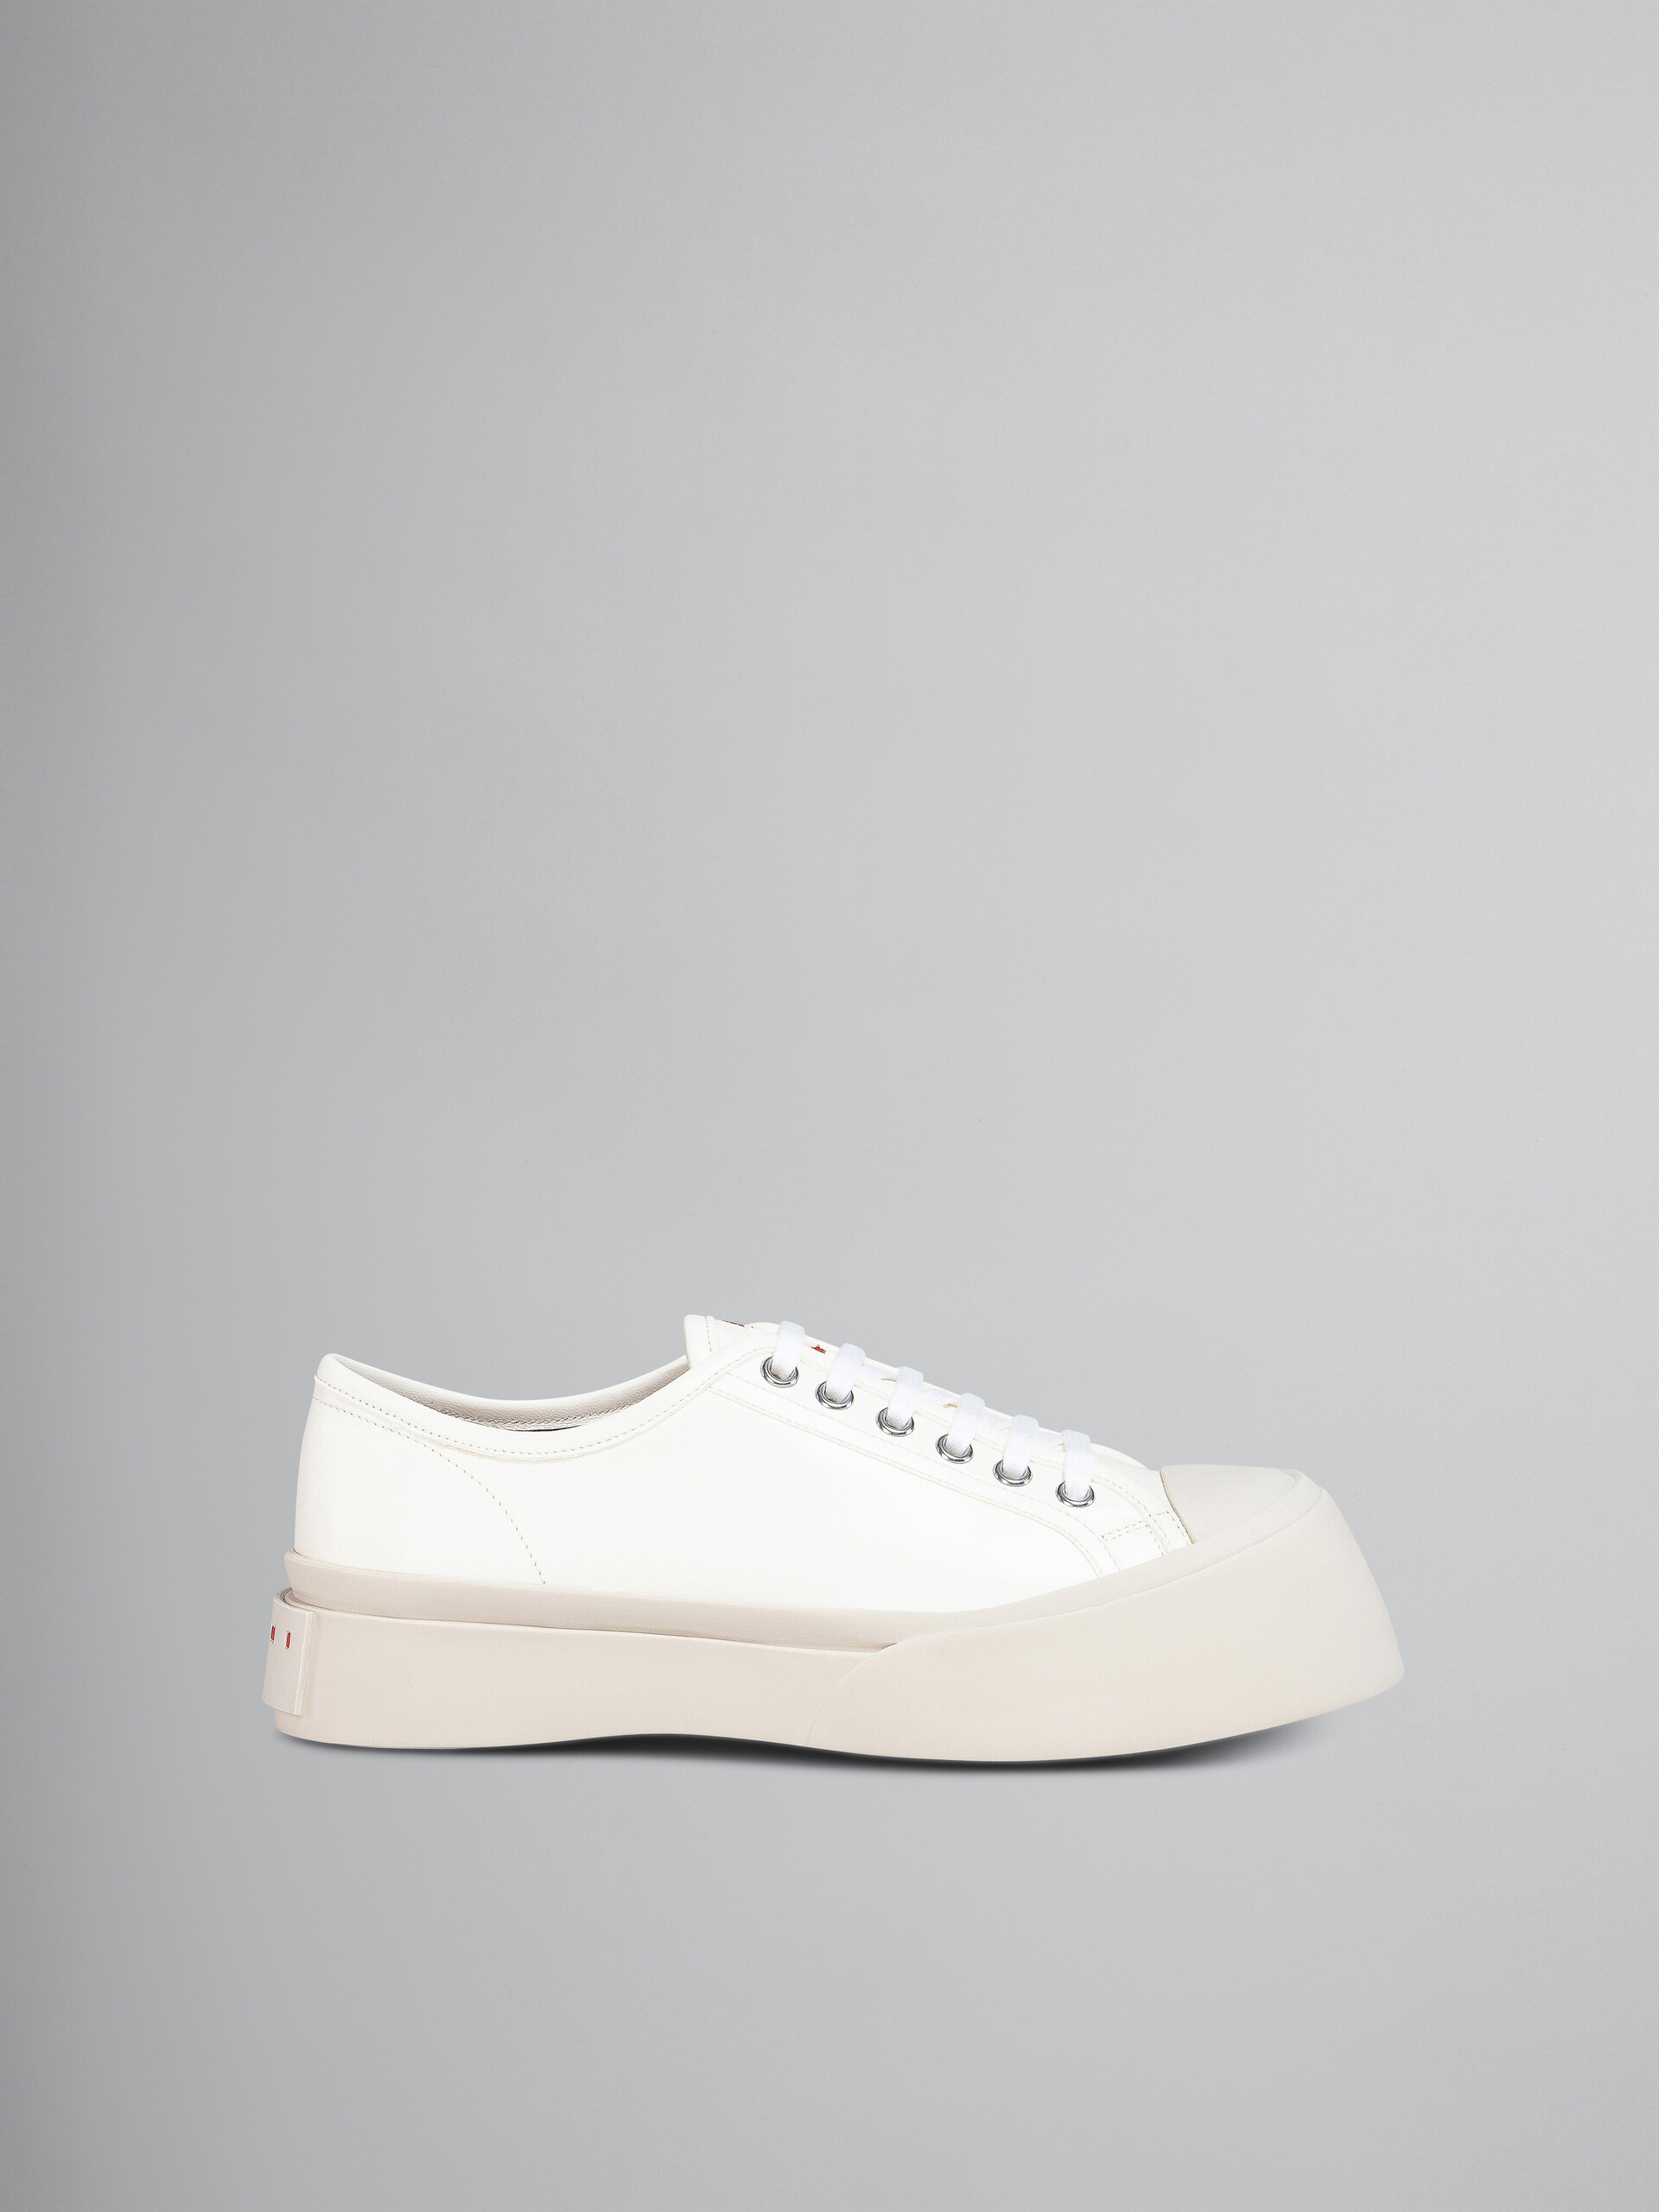 Sneaker à lacets PABLO en cuir nappa blanc - Sneakers - Image 1